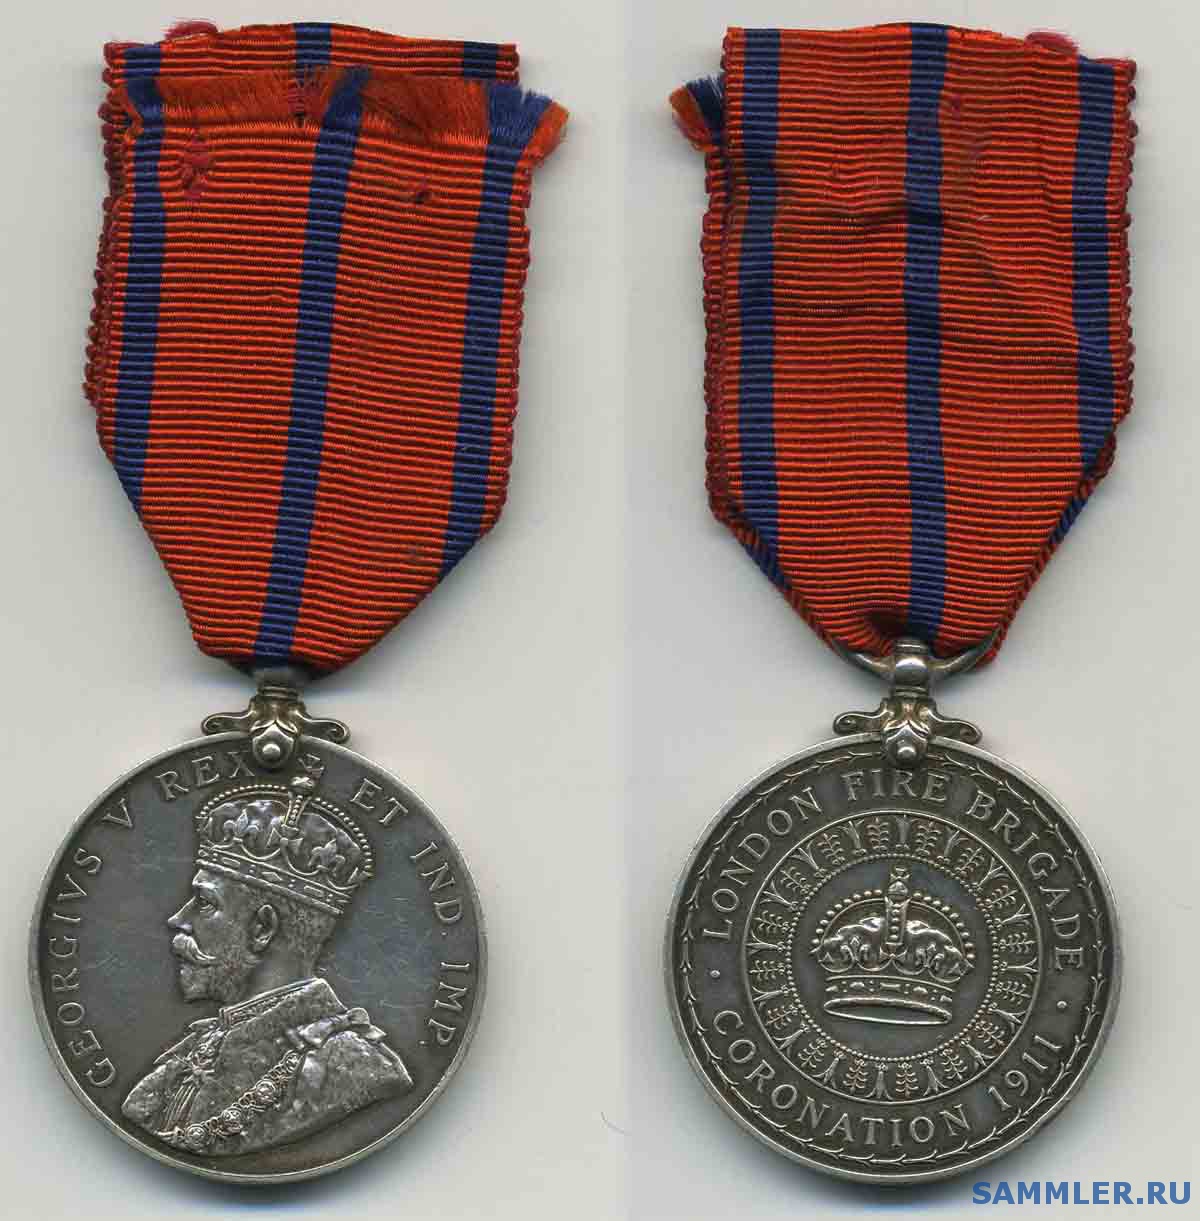 Coronation_1911_Medal_London_Fire_Brigade_G_V_.jpg